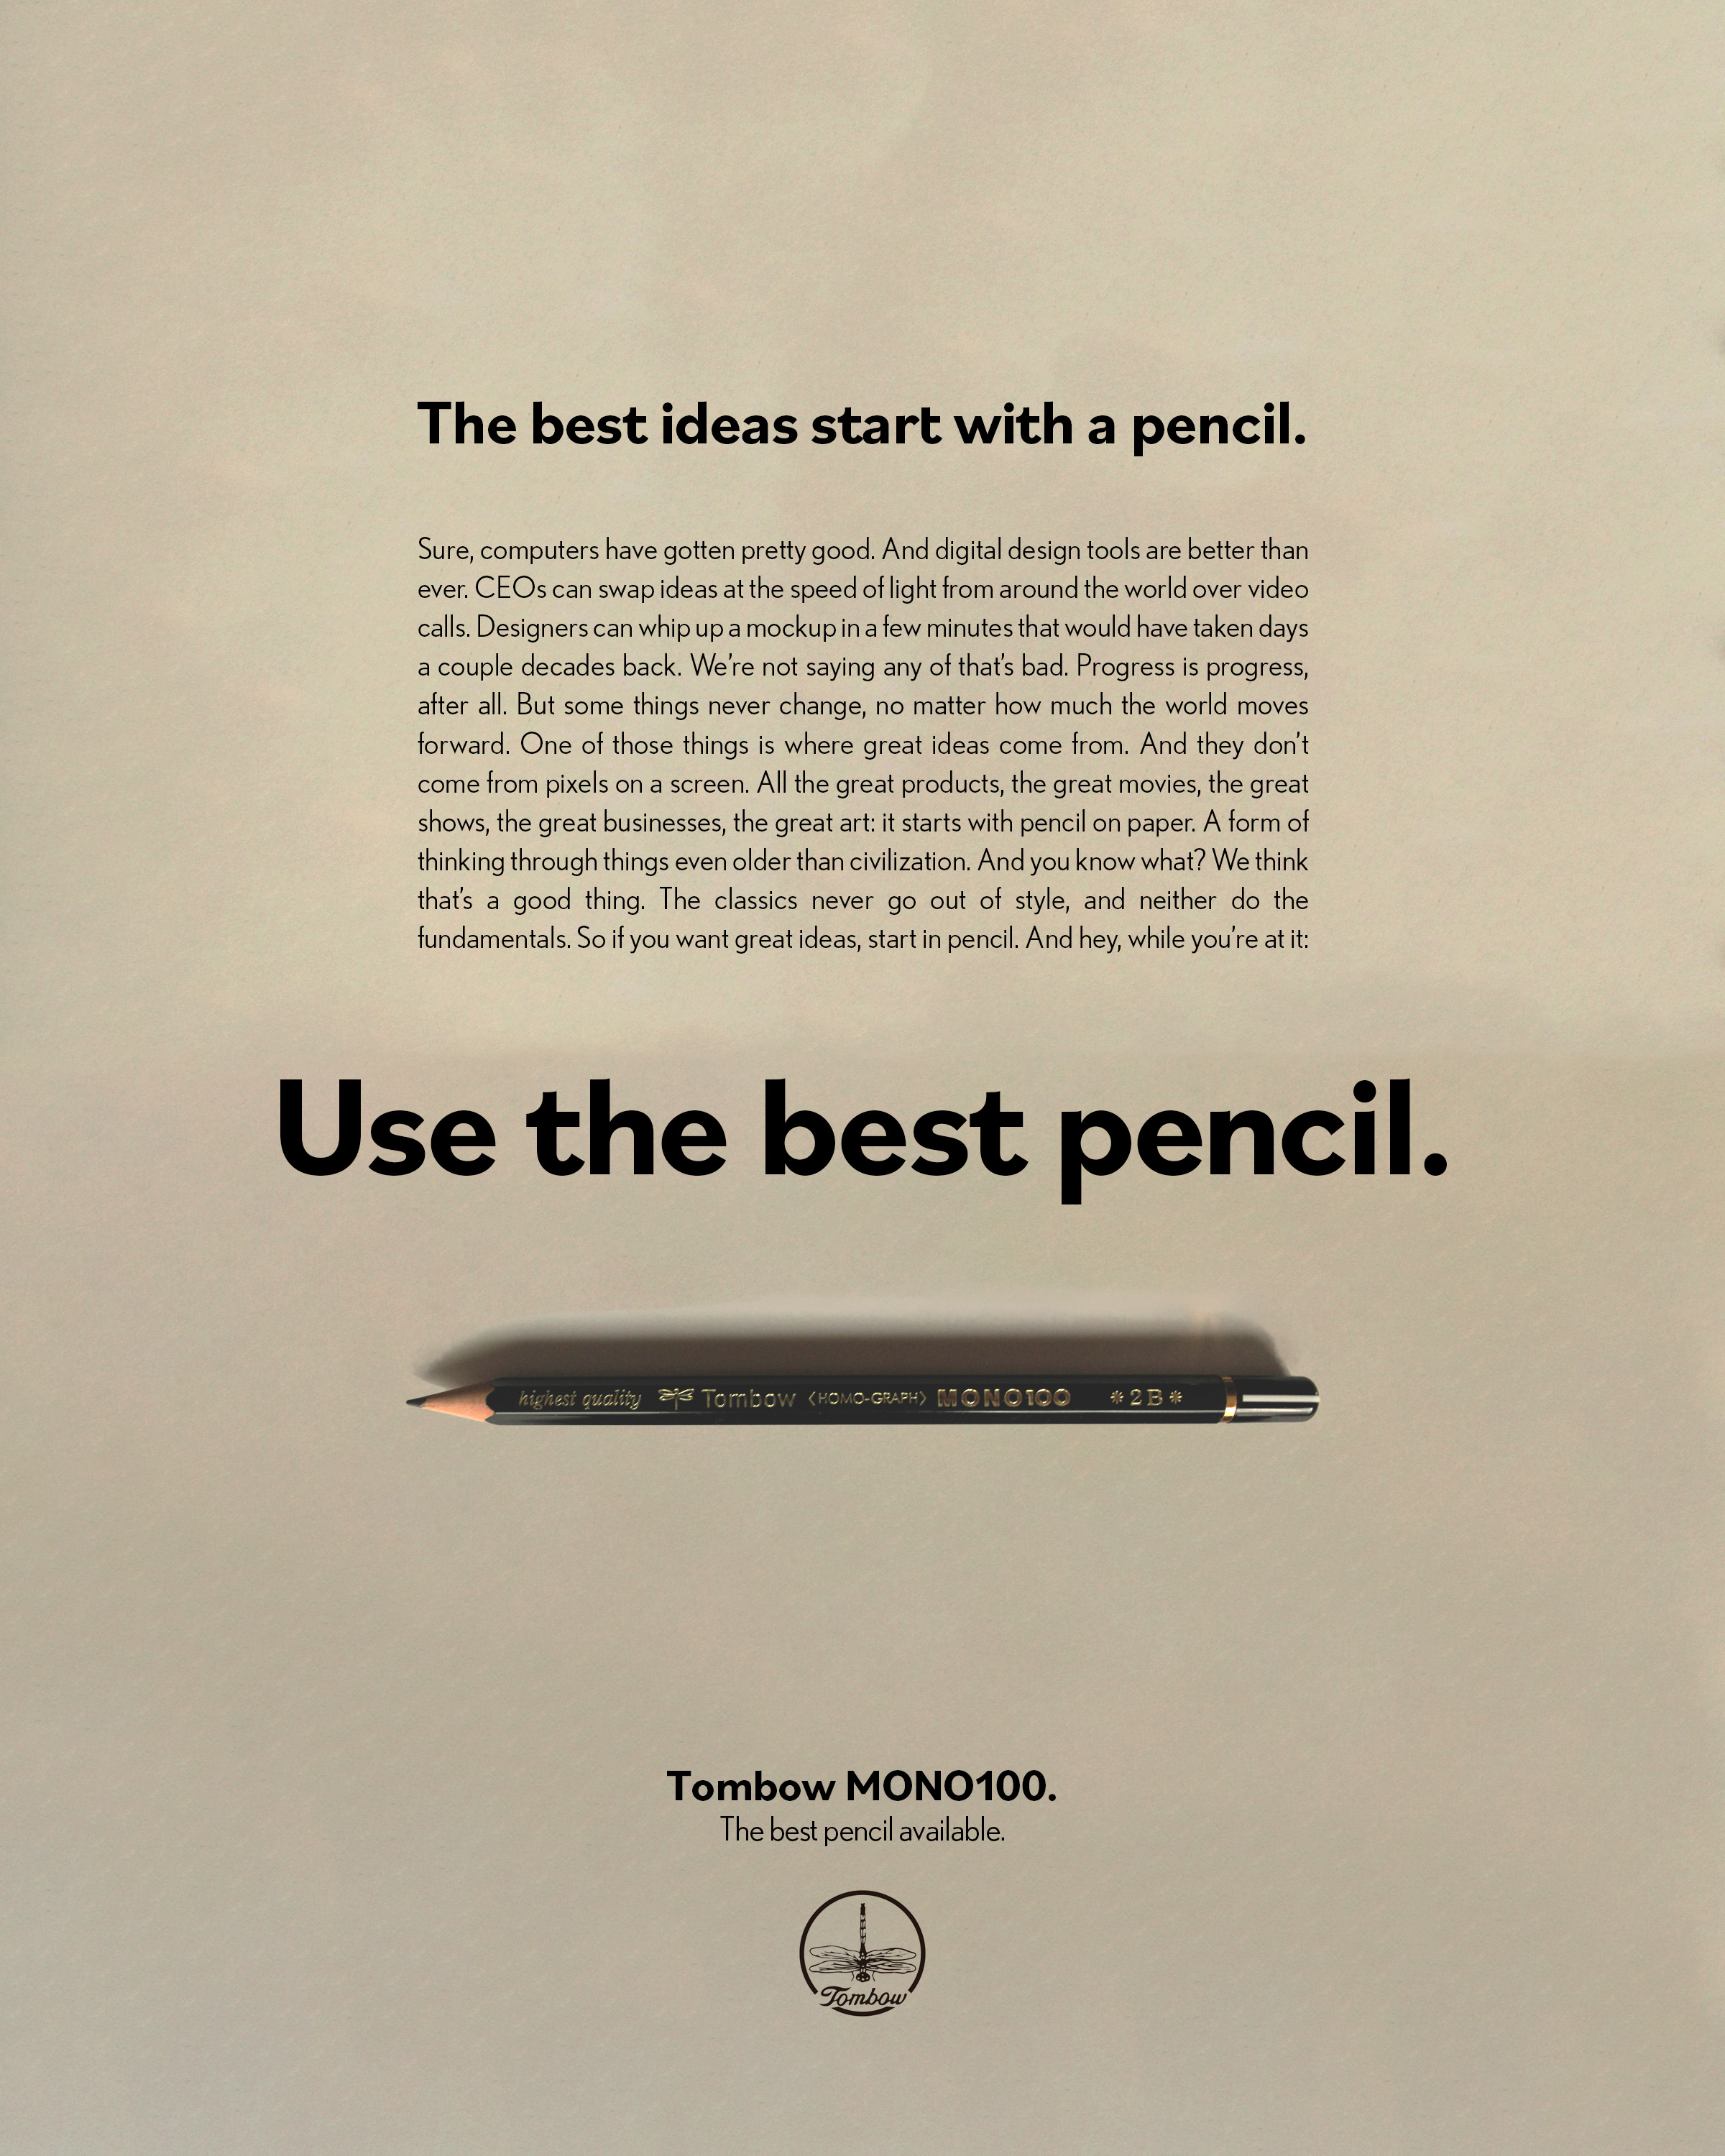 Tombow Mono pencil ad